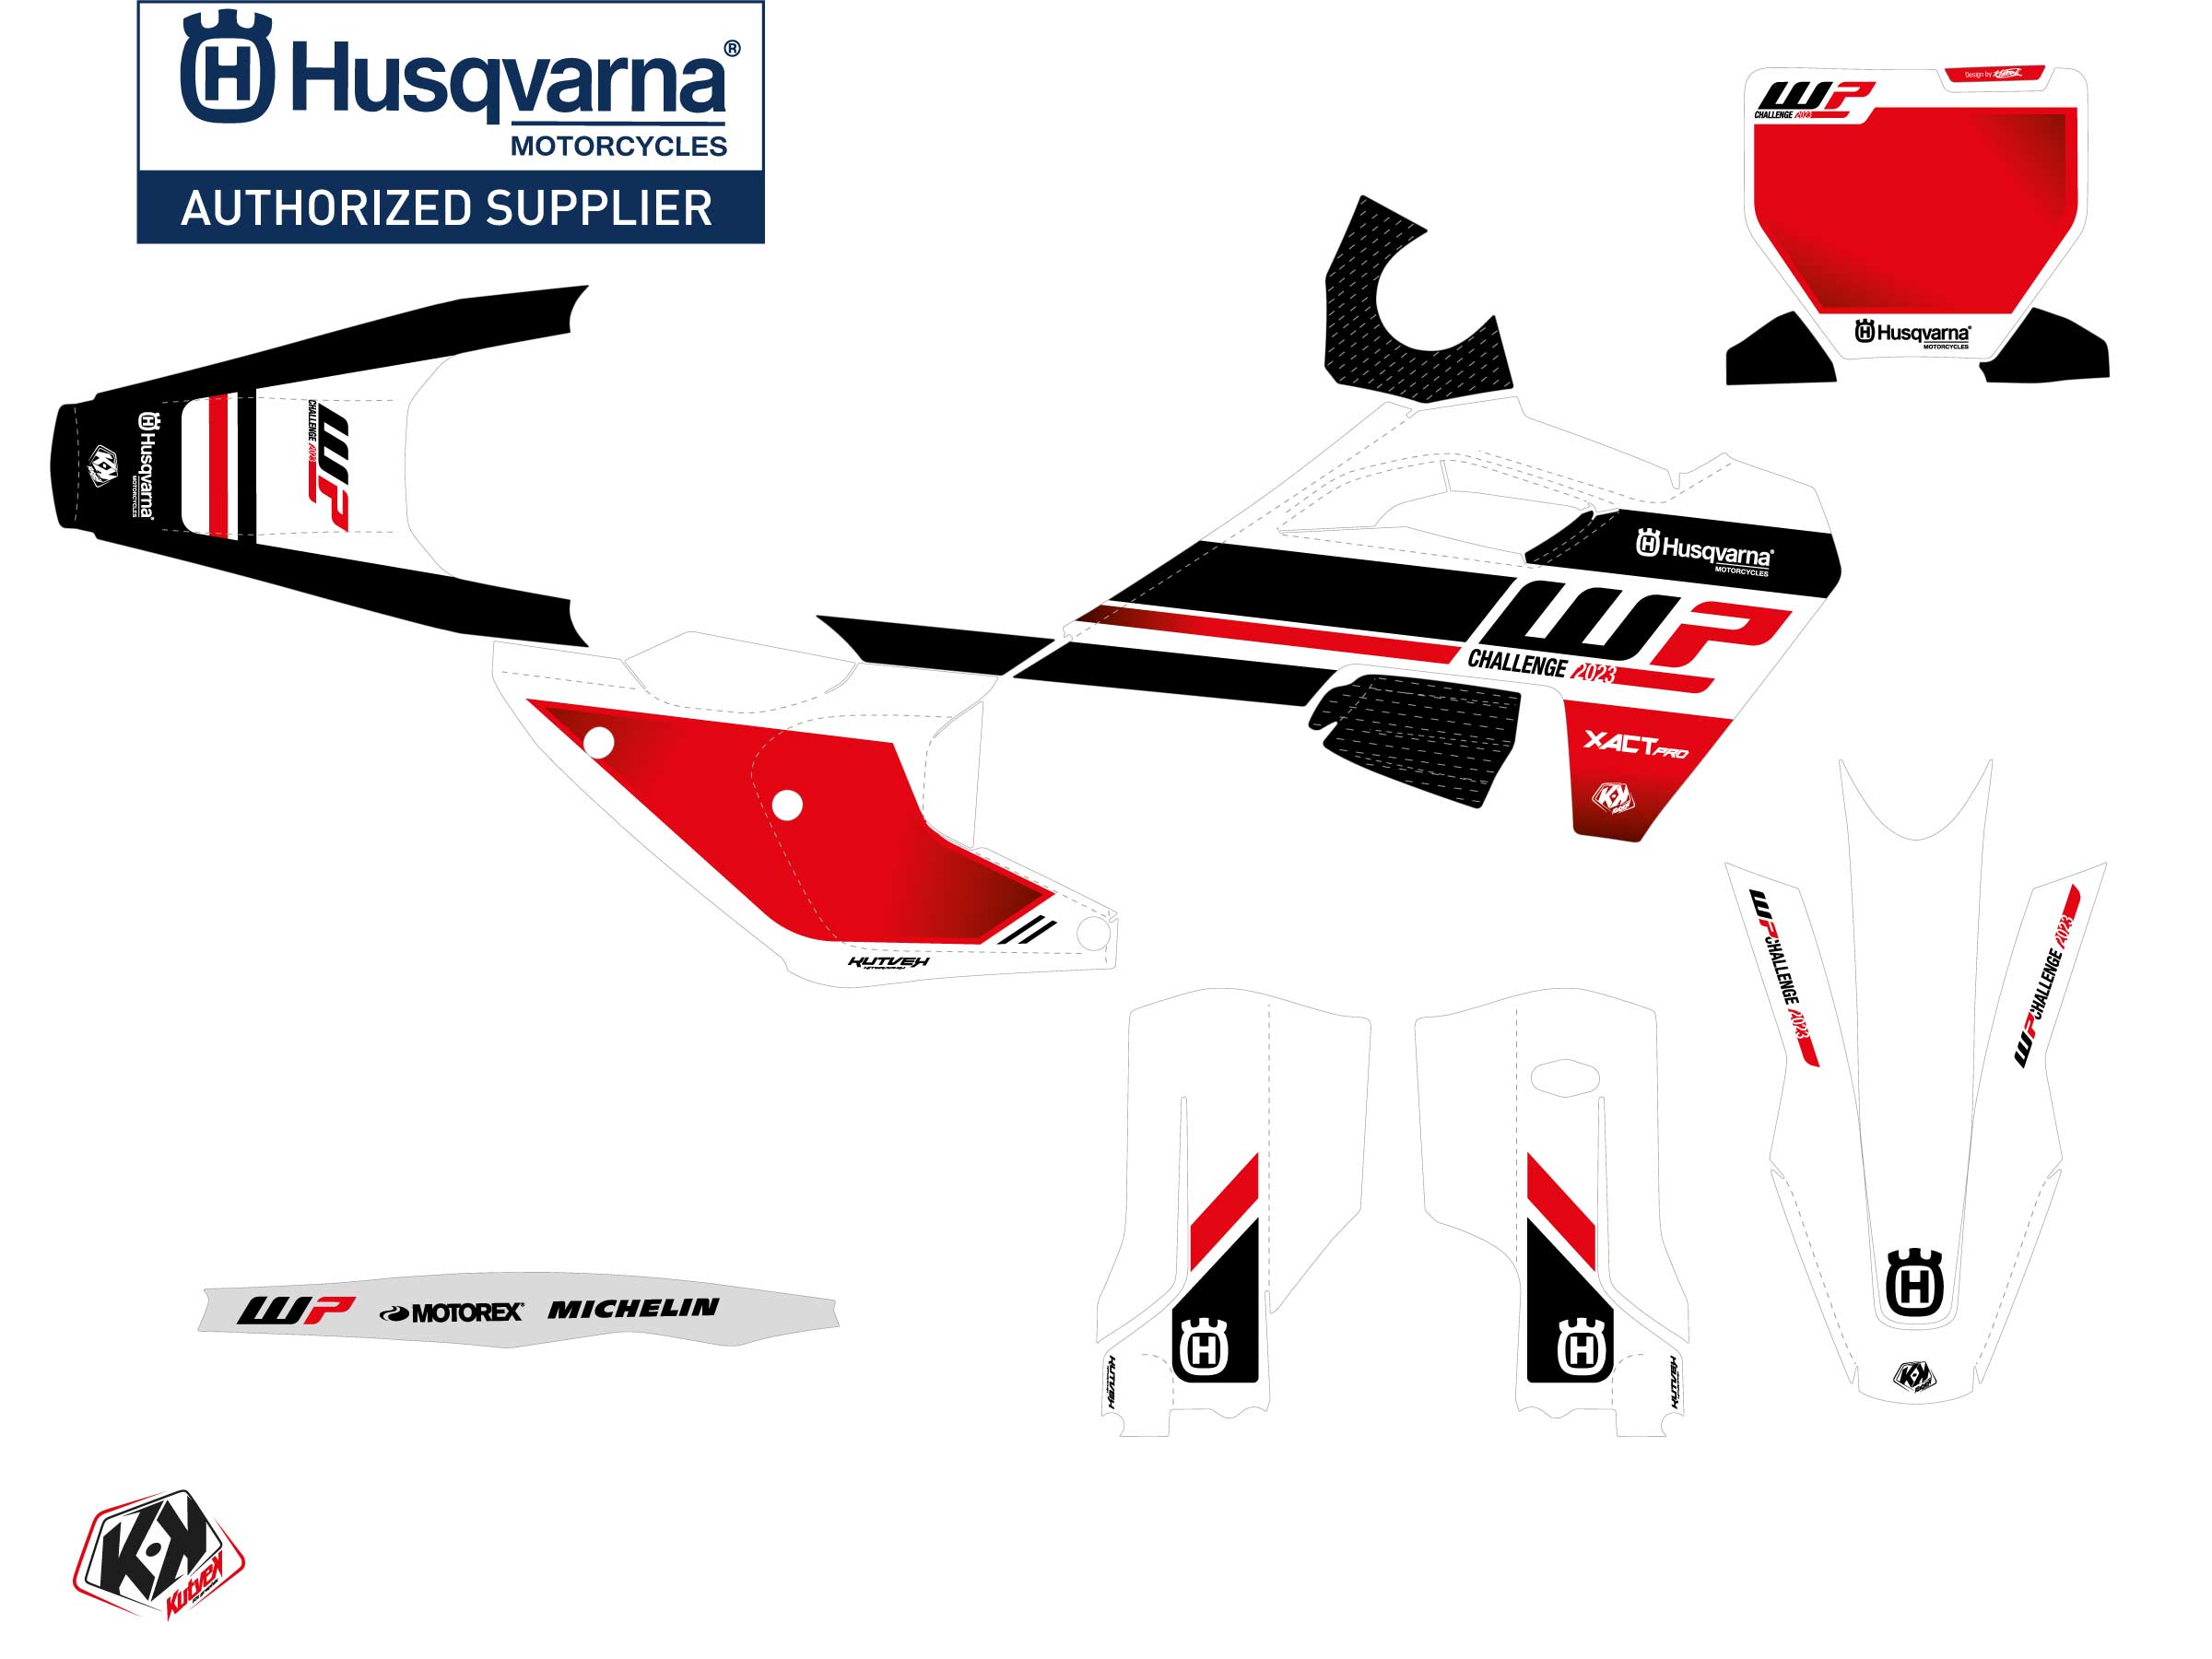 Husqvarna Fc 450 Dirt Bike Wp23 Graphic Kit White